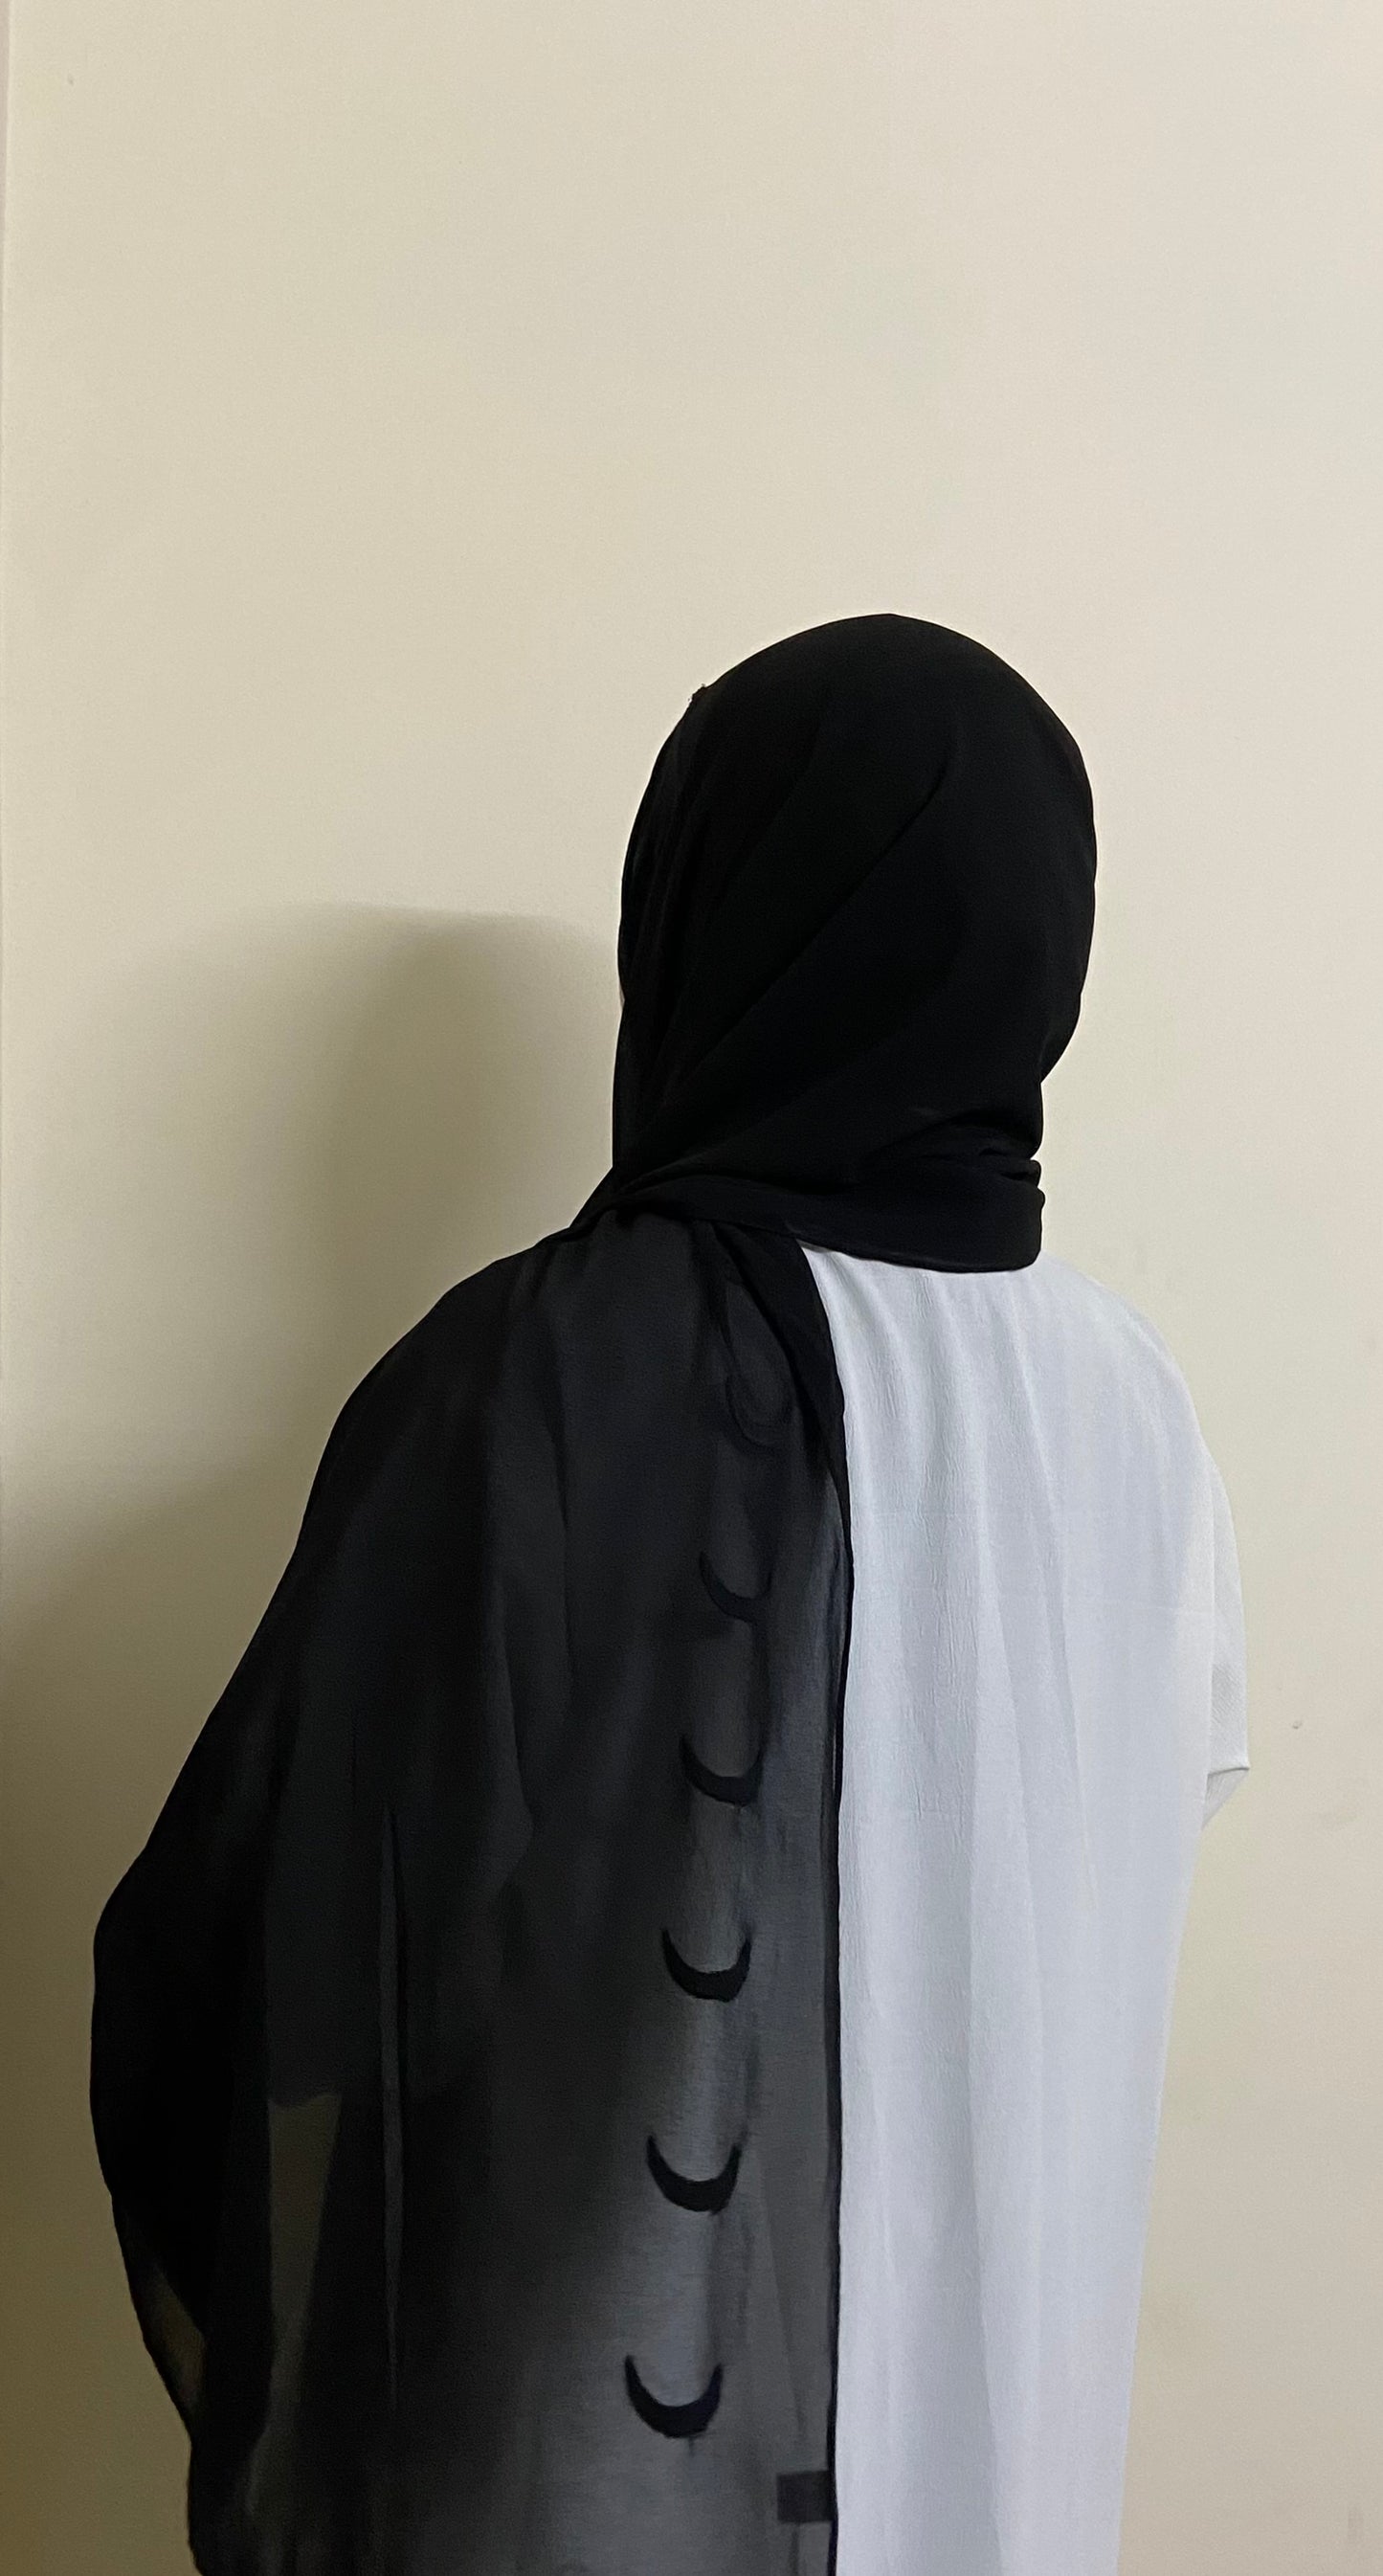 Embroidered Hijab - Black Moonlight